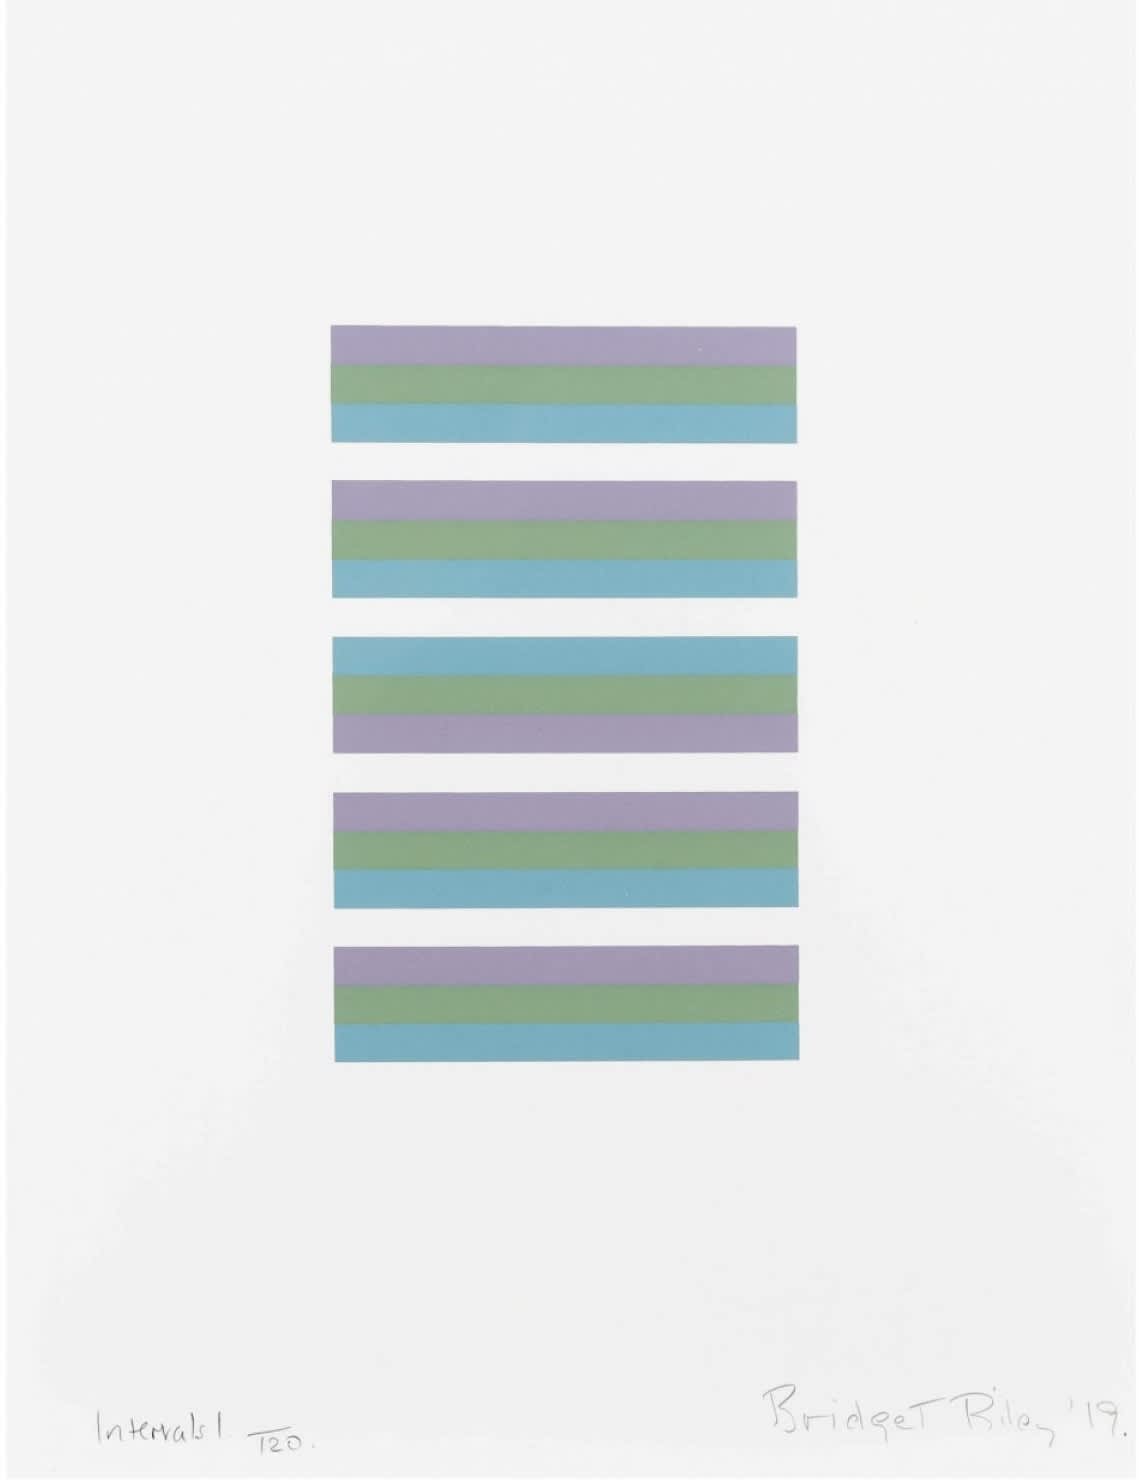 Bridget Riley Intervals 1 Screenprint in colours, on white wove paper